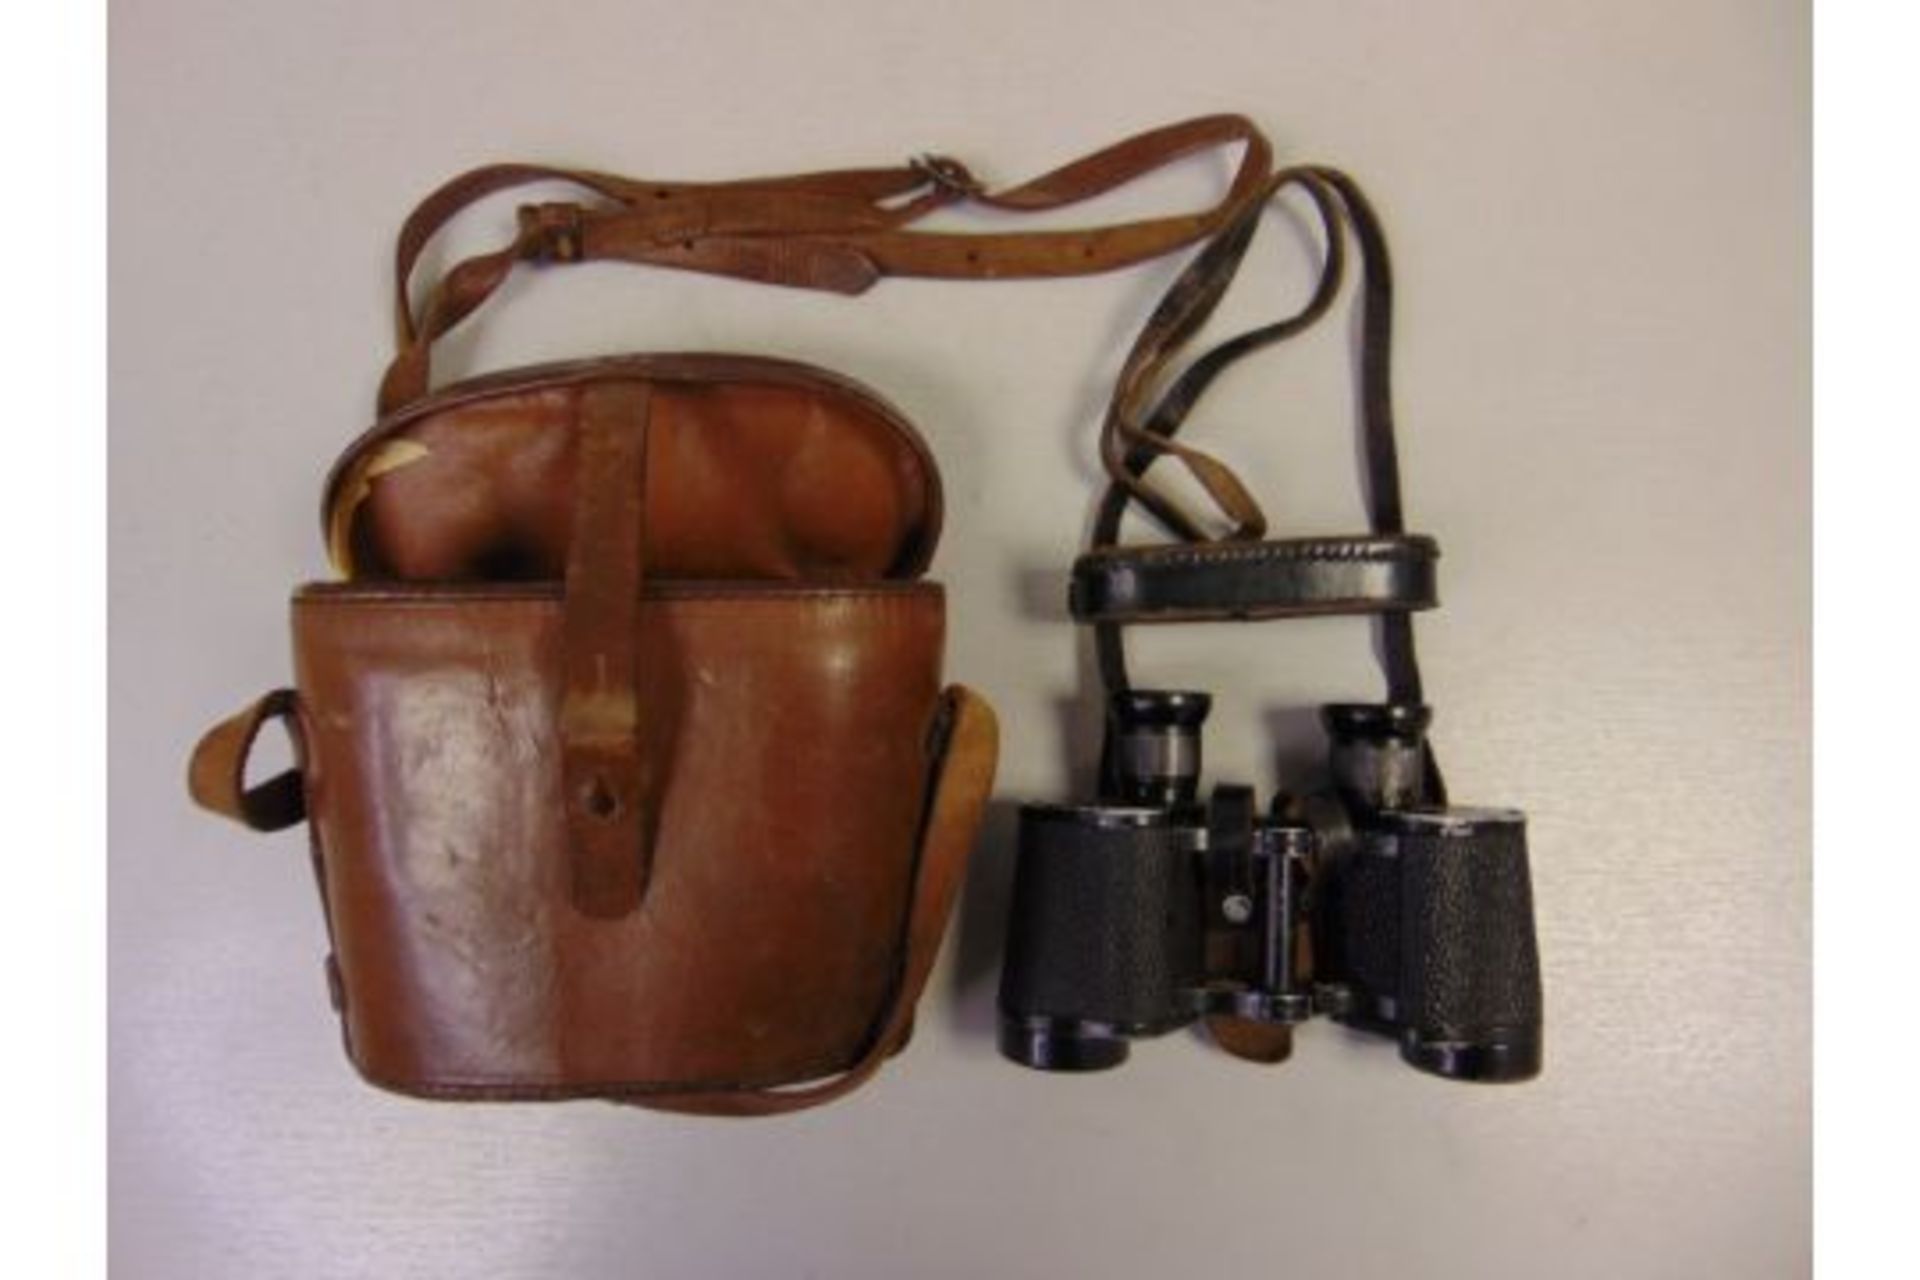 NIFE 6 x 30 Binoculars in Original Leather Case dated 1948